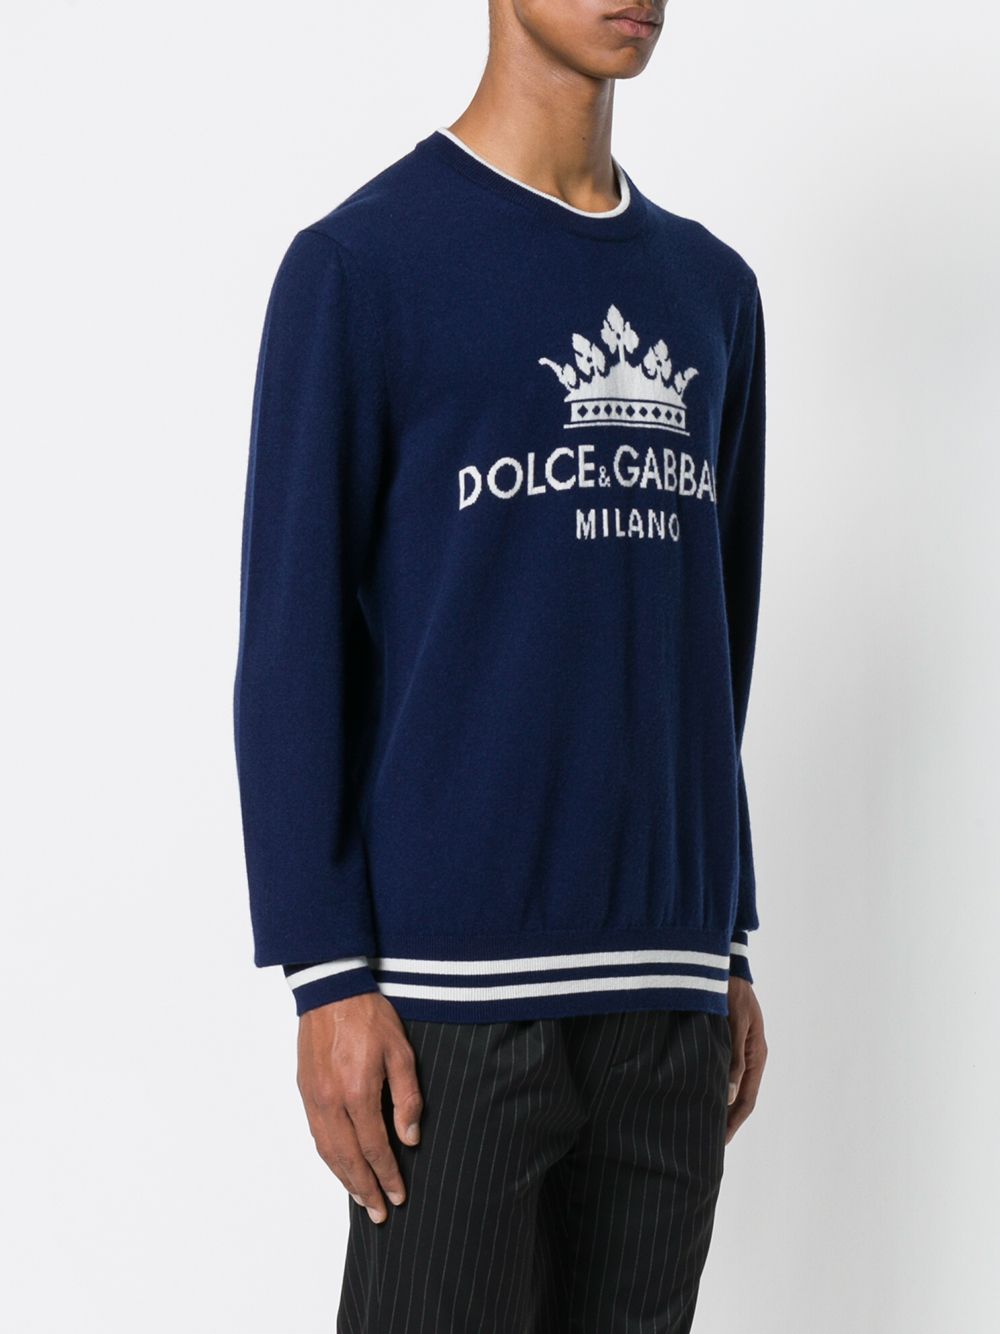 фото Dolce & Gabbana джемпер с логотипом интарсия